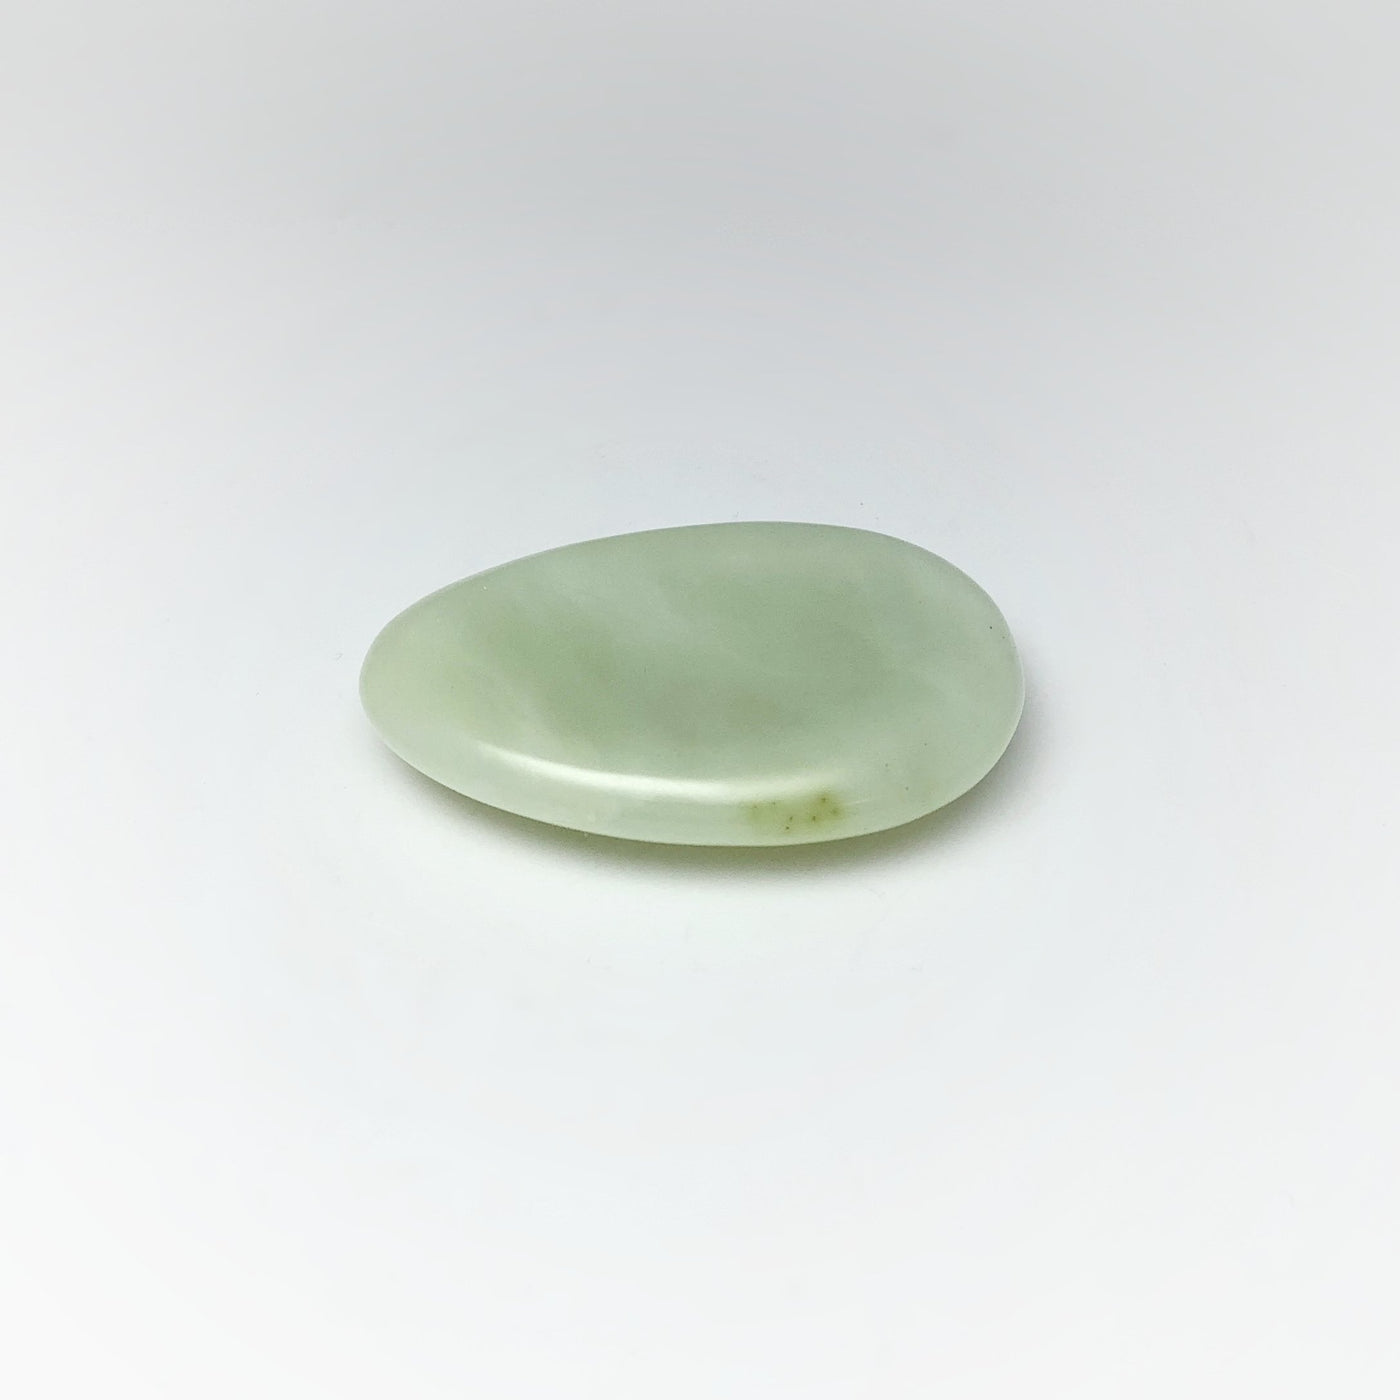 Worry Stone - New Jade